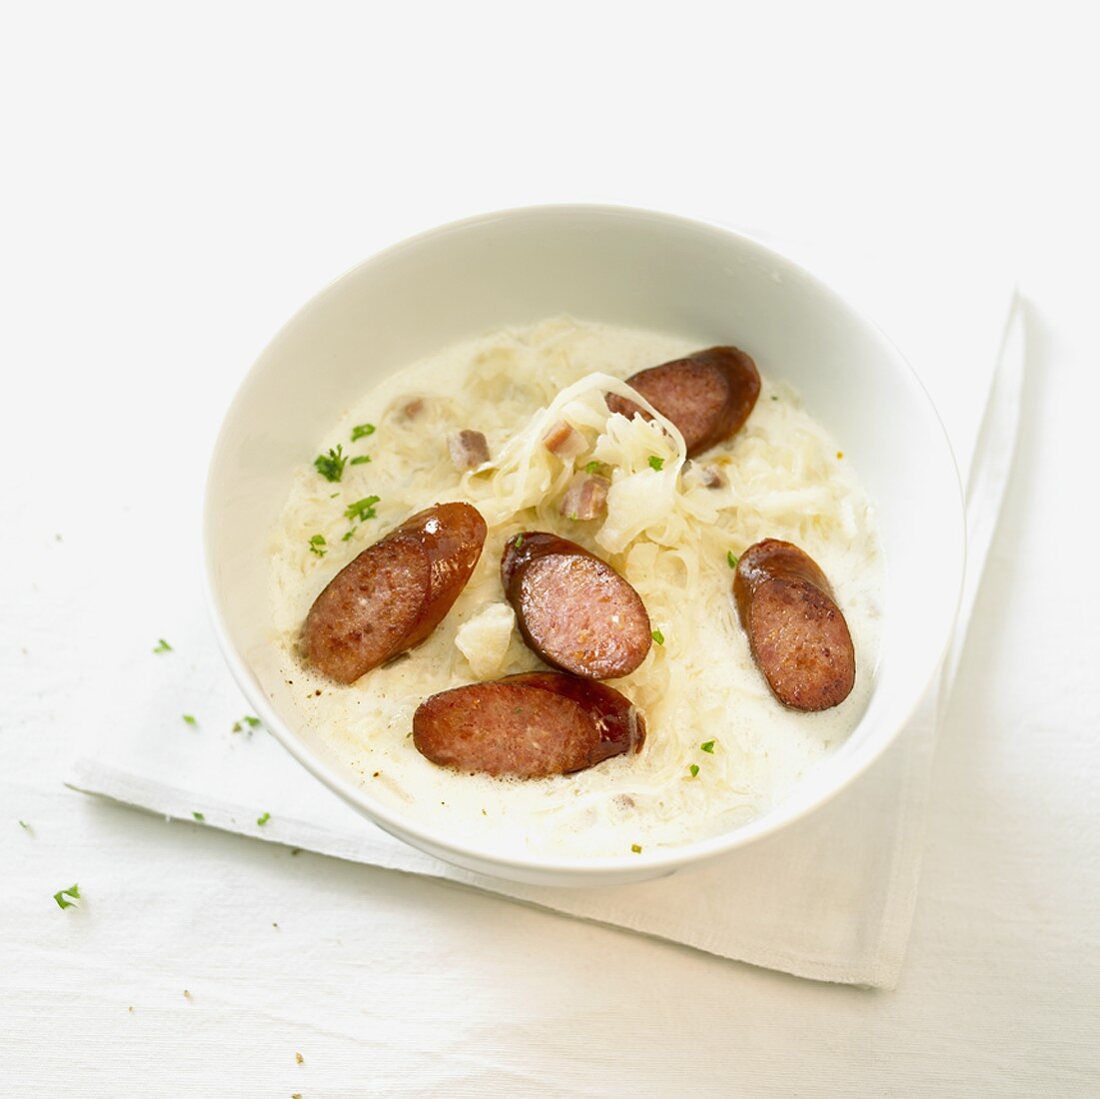 Sauerkraut soup with sausages